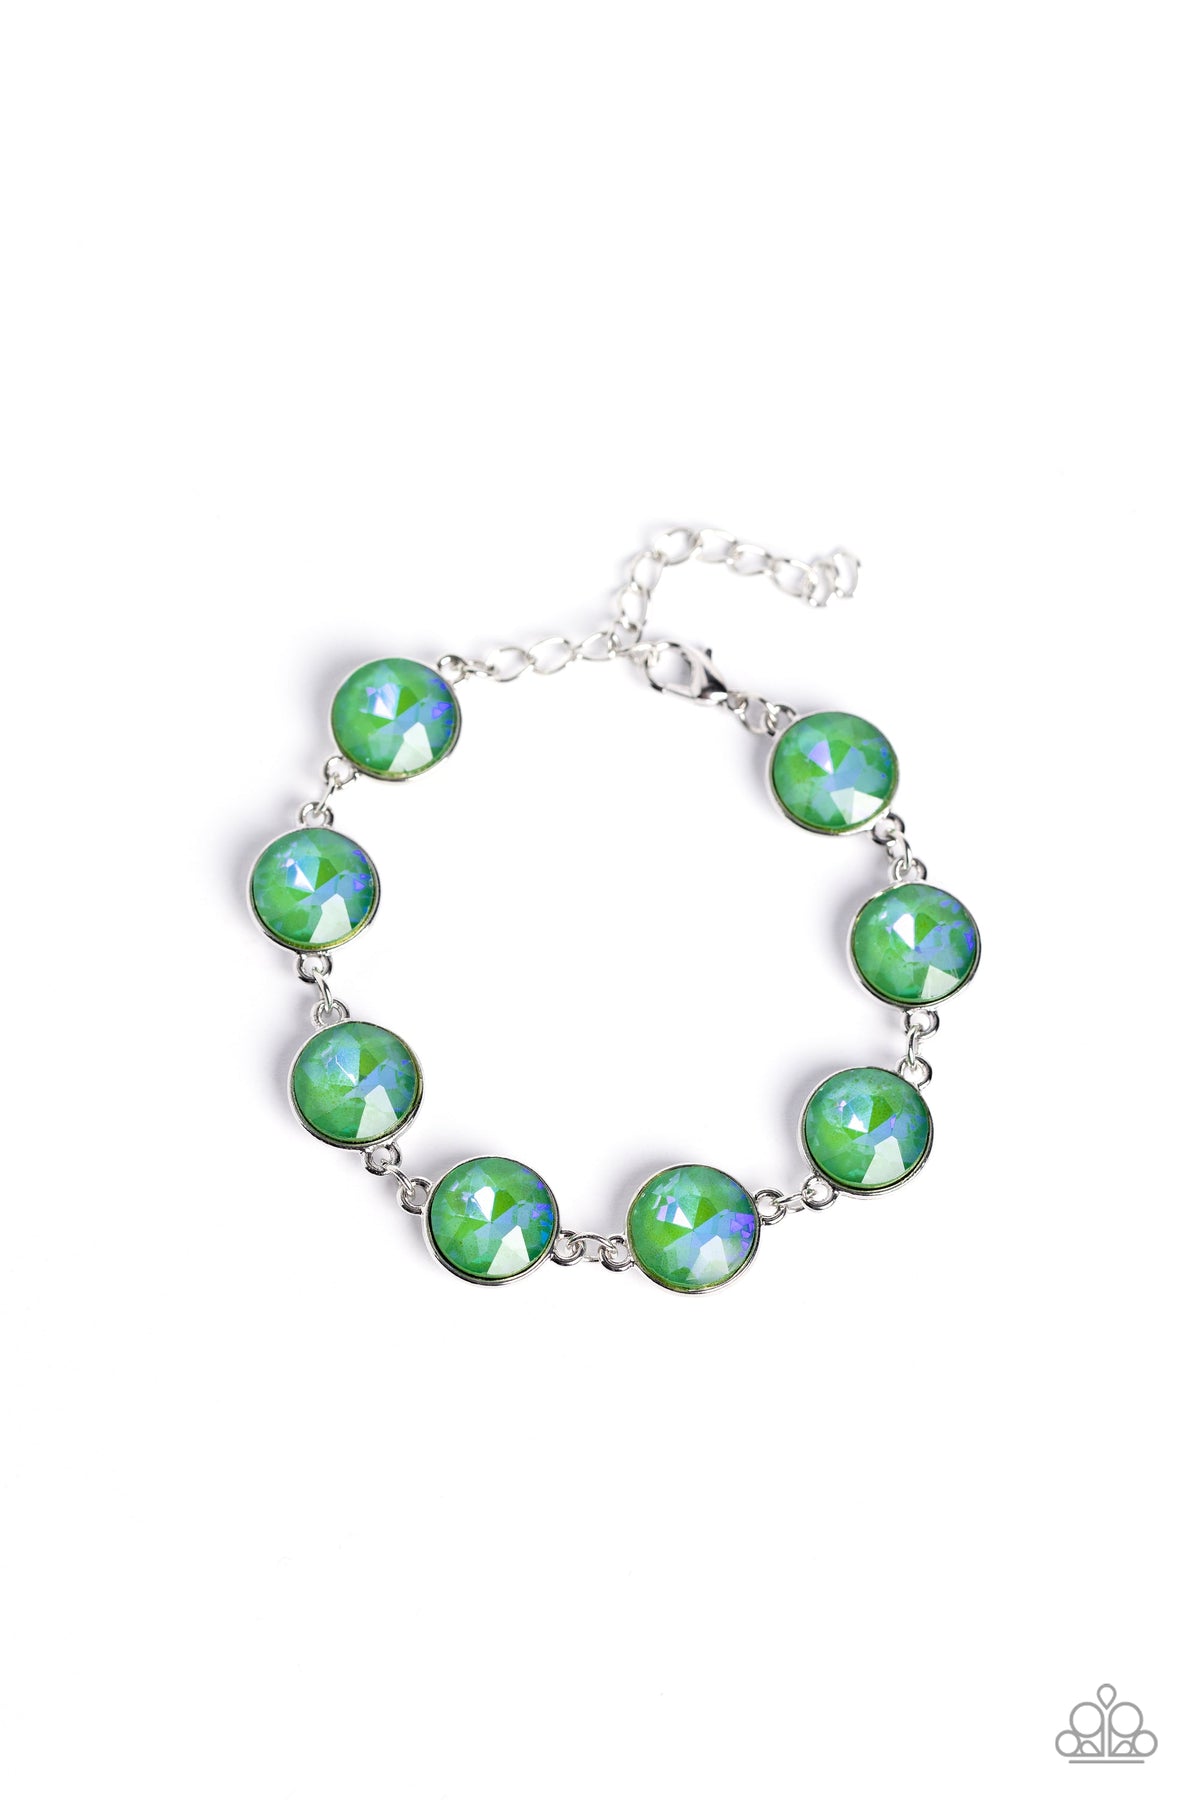 Enchanted Emblems Green Rhinestone Bracelet- lightbox - CarasShop.com - $5 Jewelry by Cara Jewels